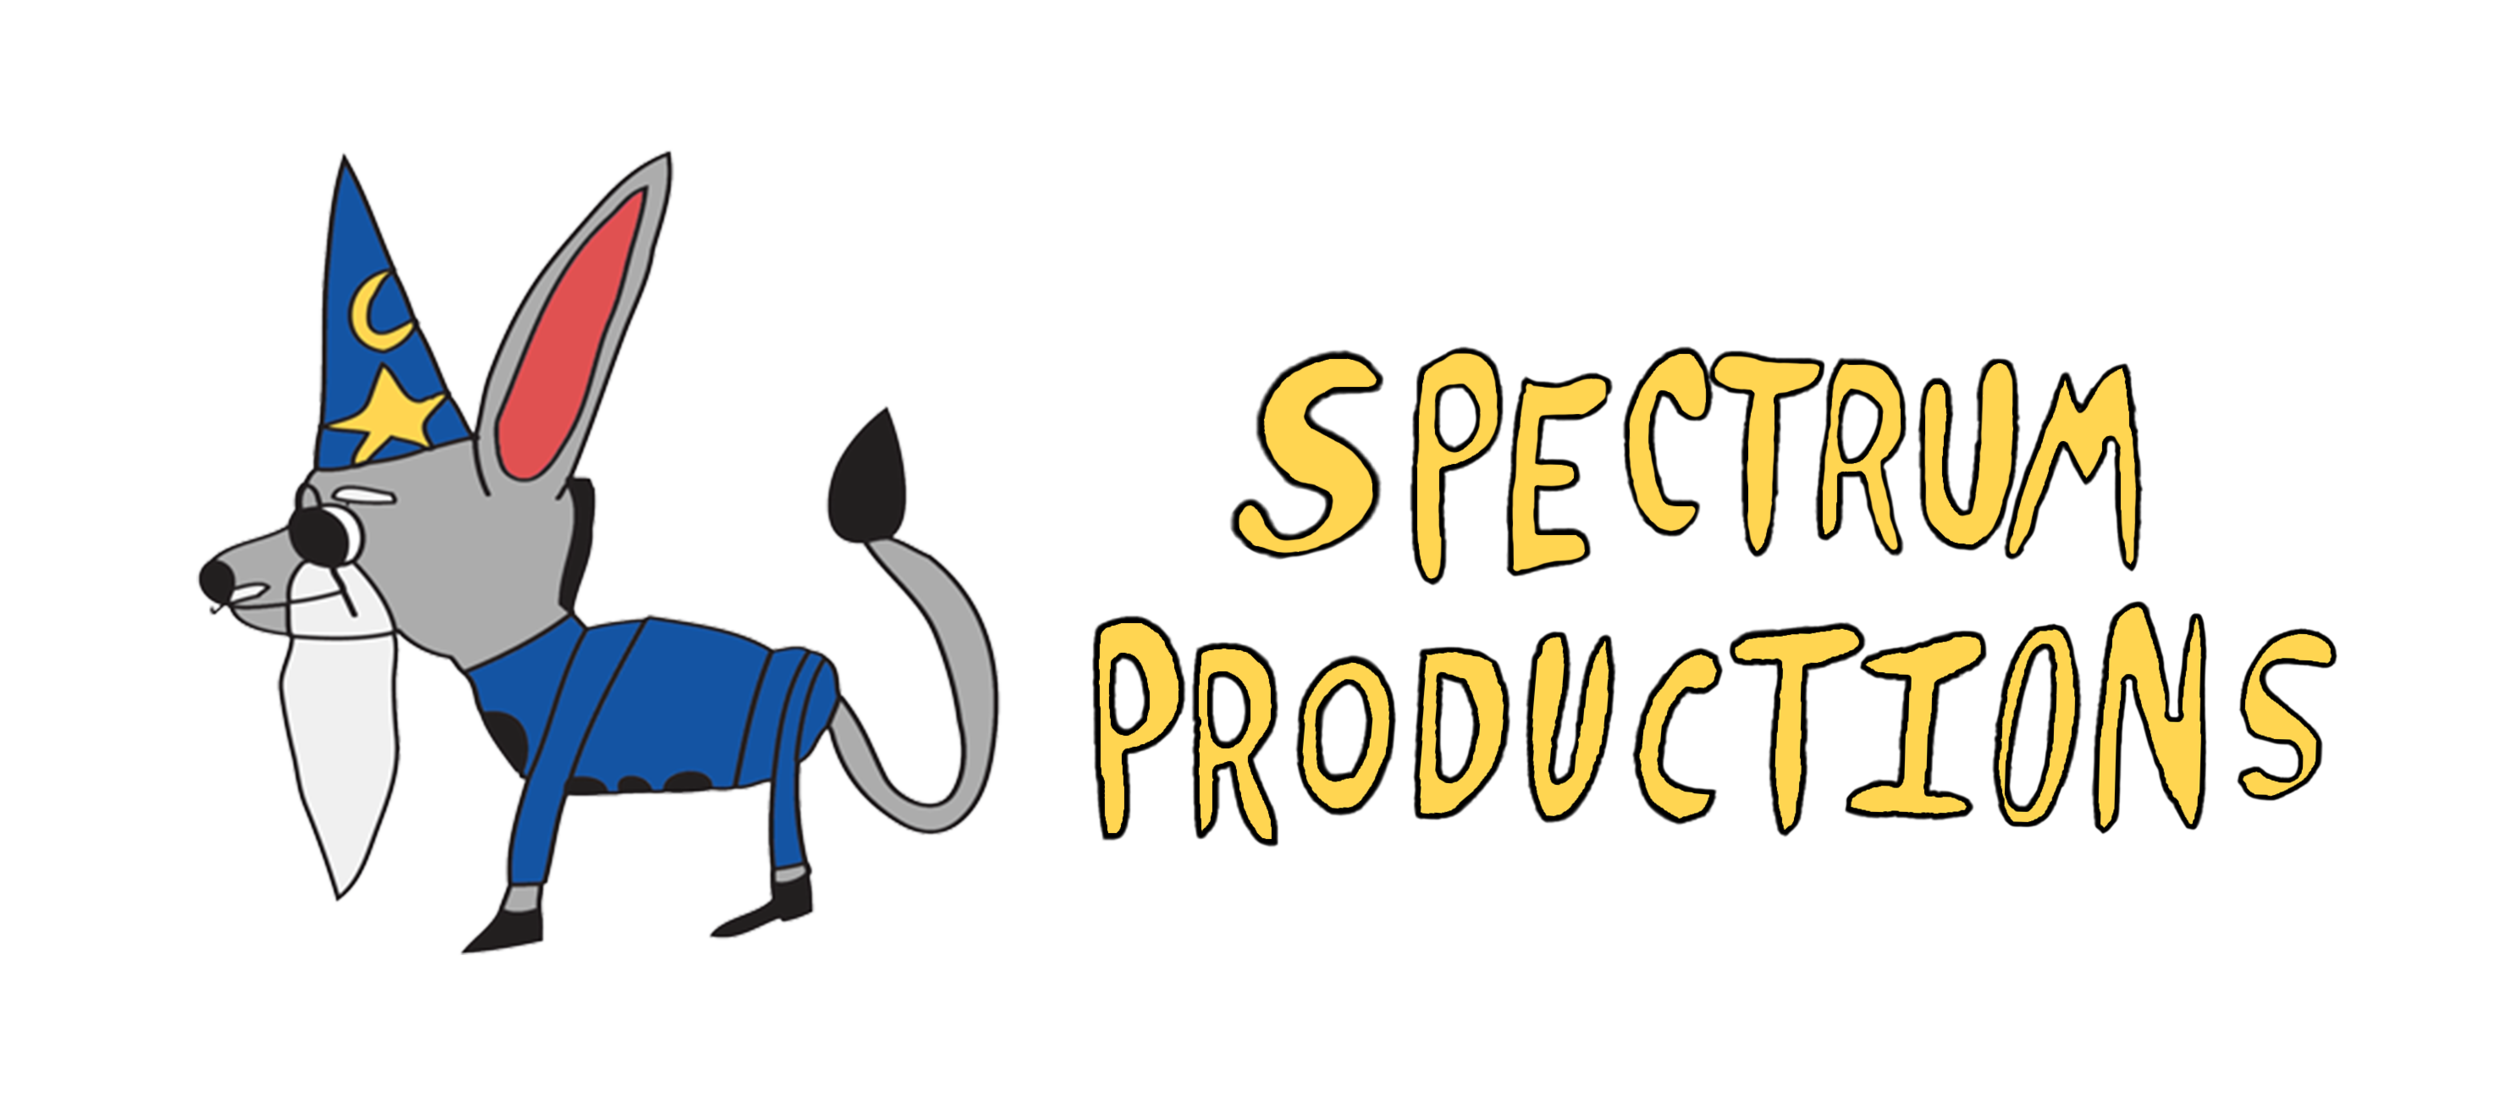 SPECTRUM PRODUCTIONS